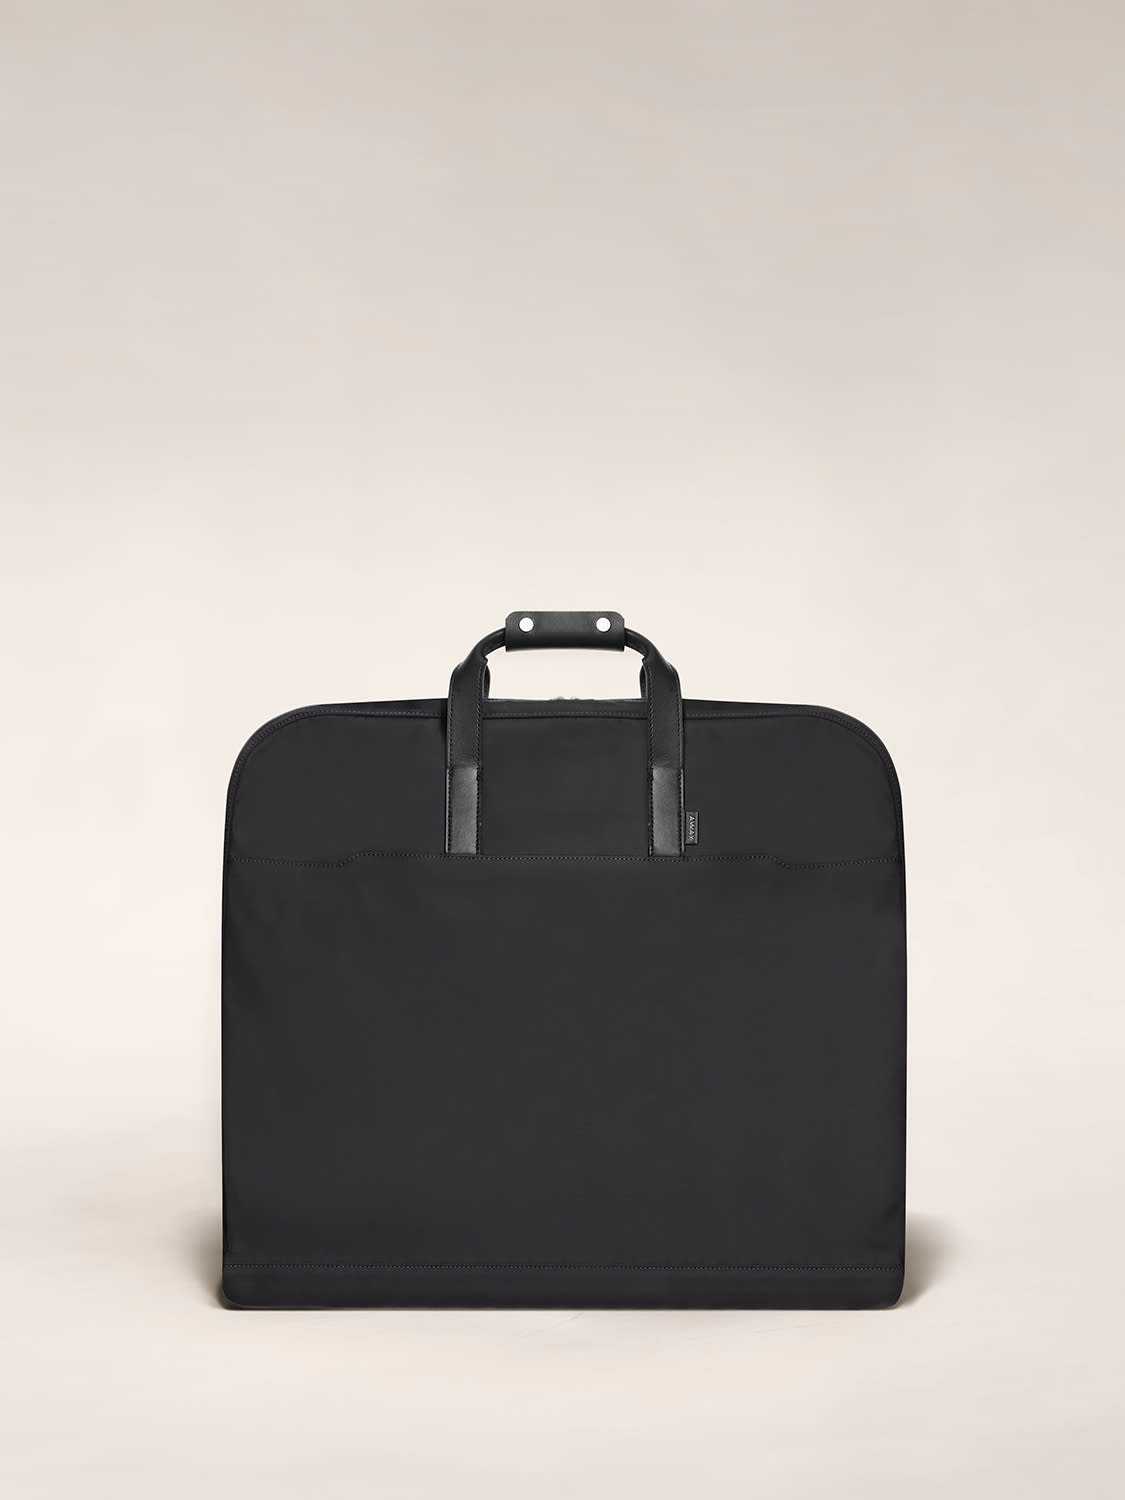 The Garment Bag in Black nylon